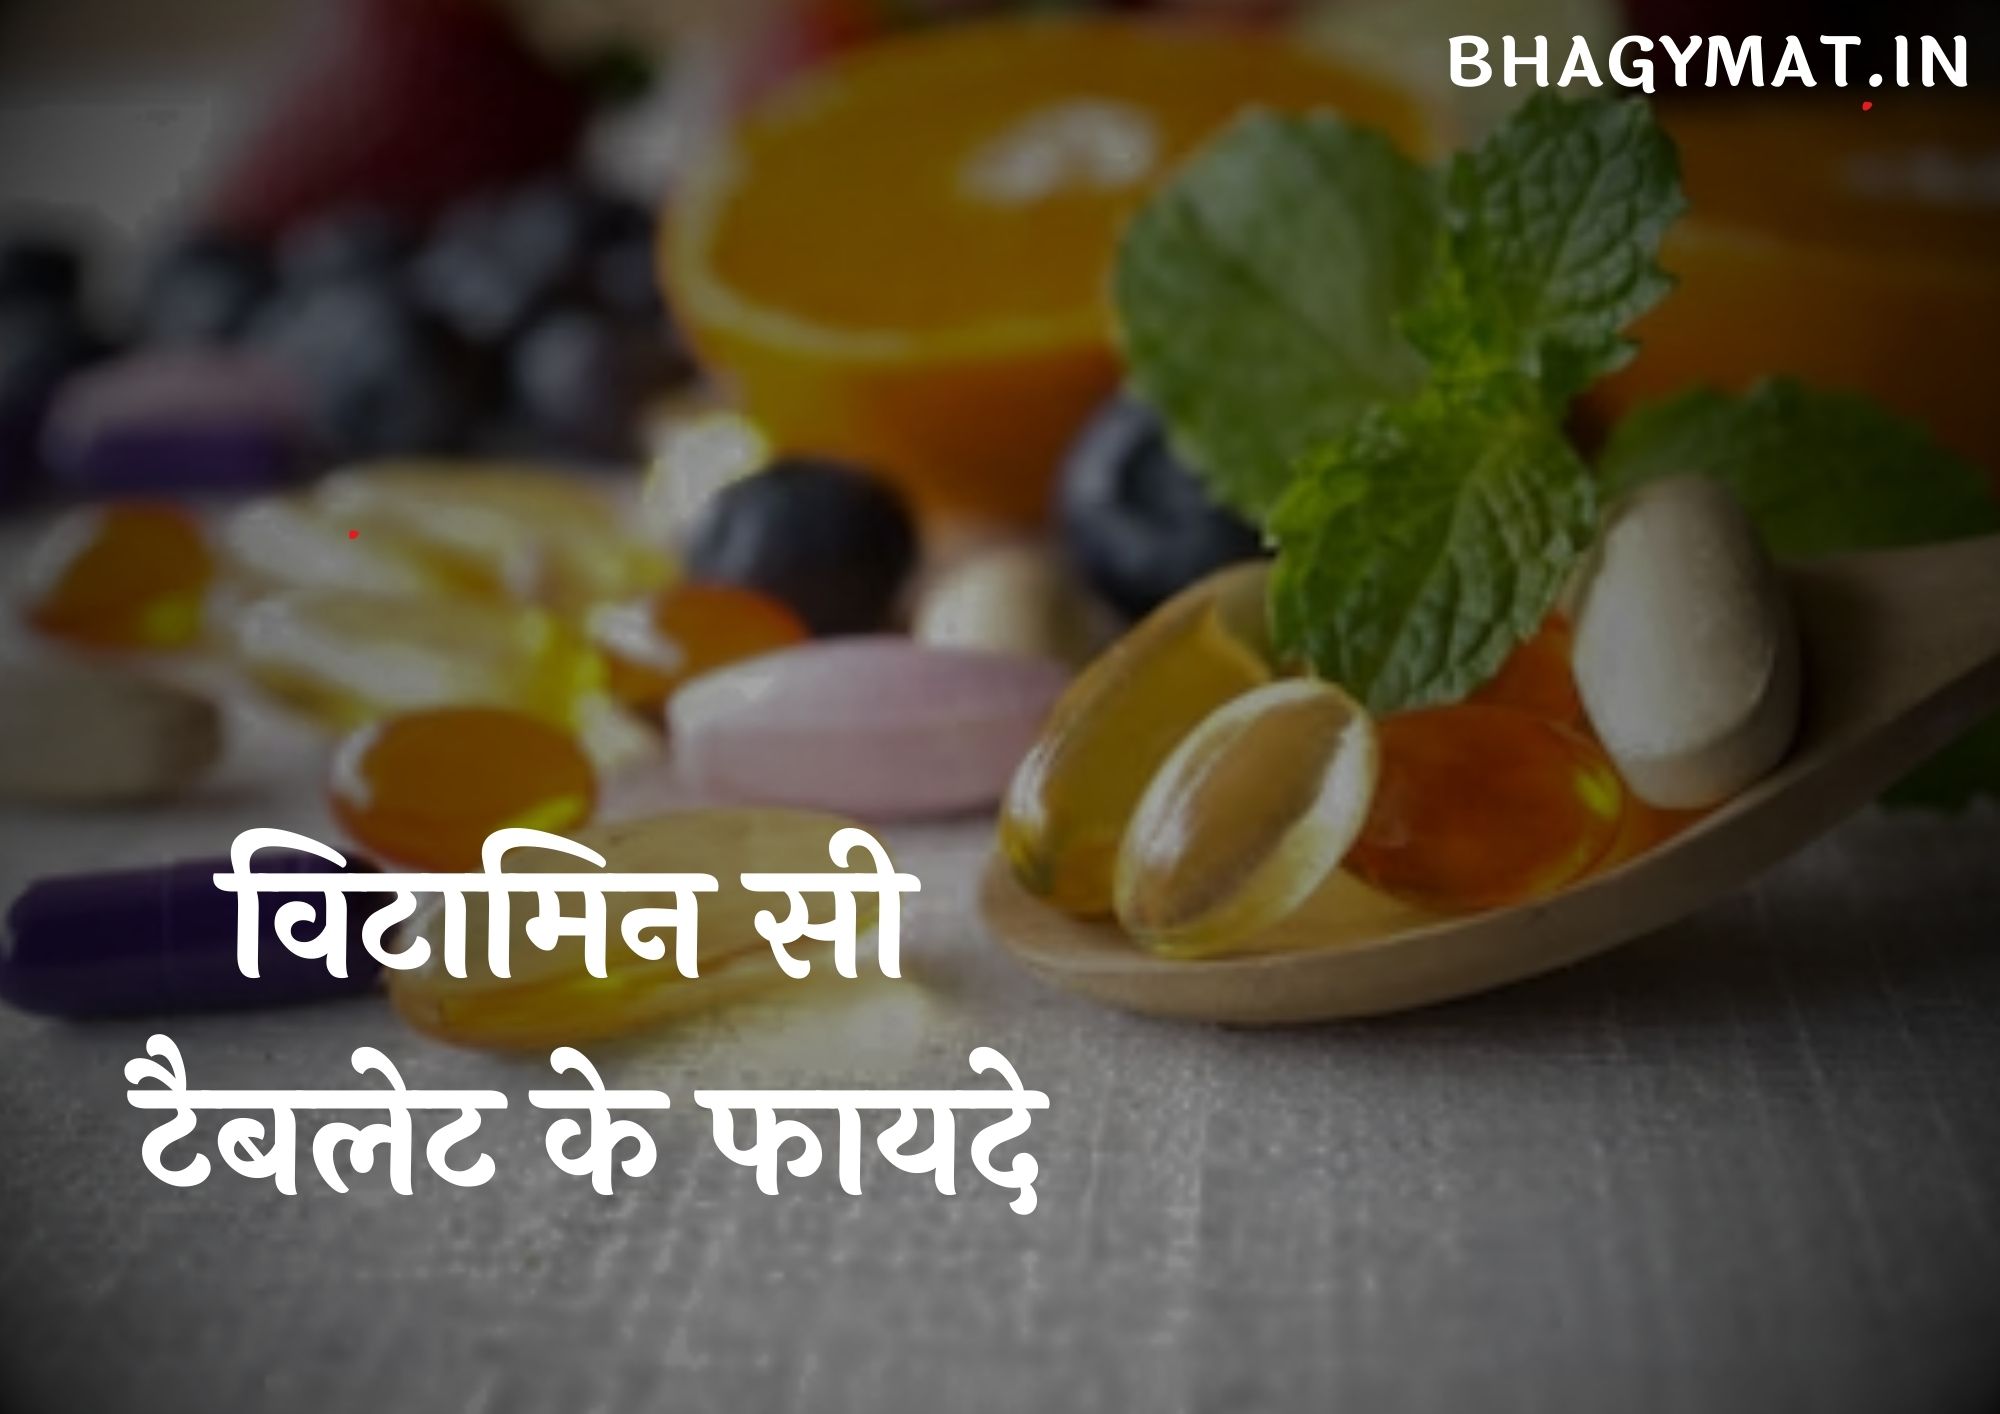 विटामिन सी टैबलेट के फायदे (Benefits Of Vitamin C Tablets In Hindi) - Vitamin C Tablets Benefits In Hind